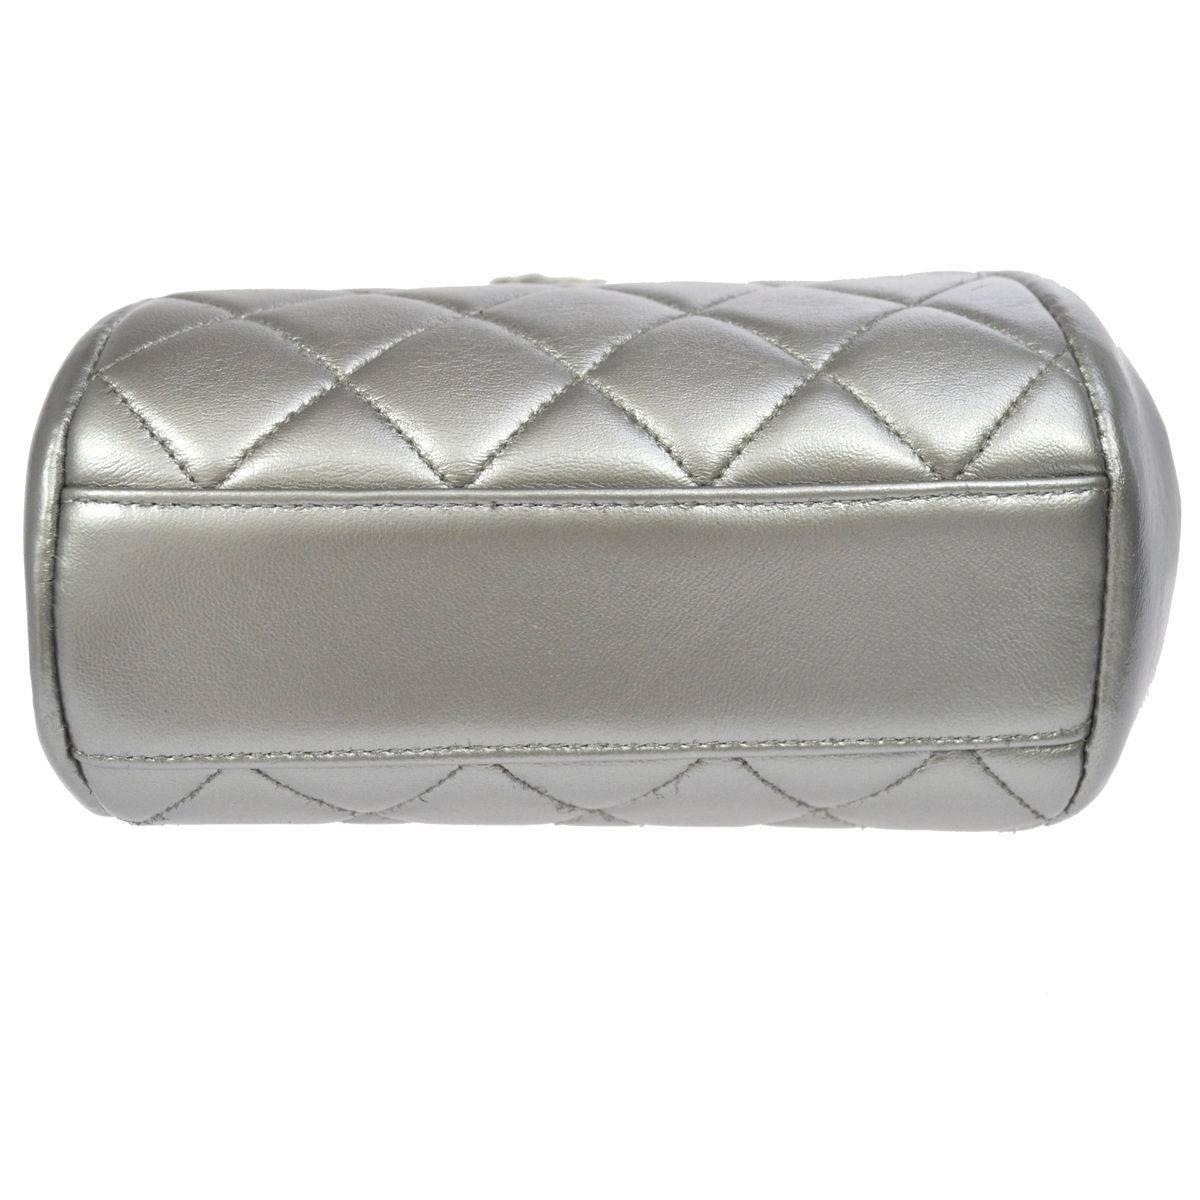 Women's Chanel Silver Leather Party Kisslock Evening Flap Shoulder Bag